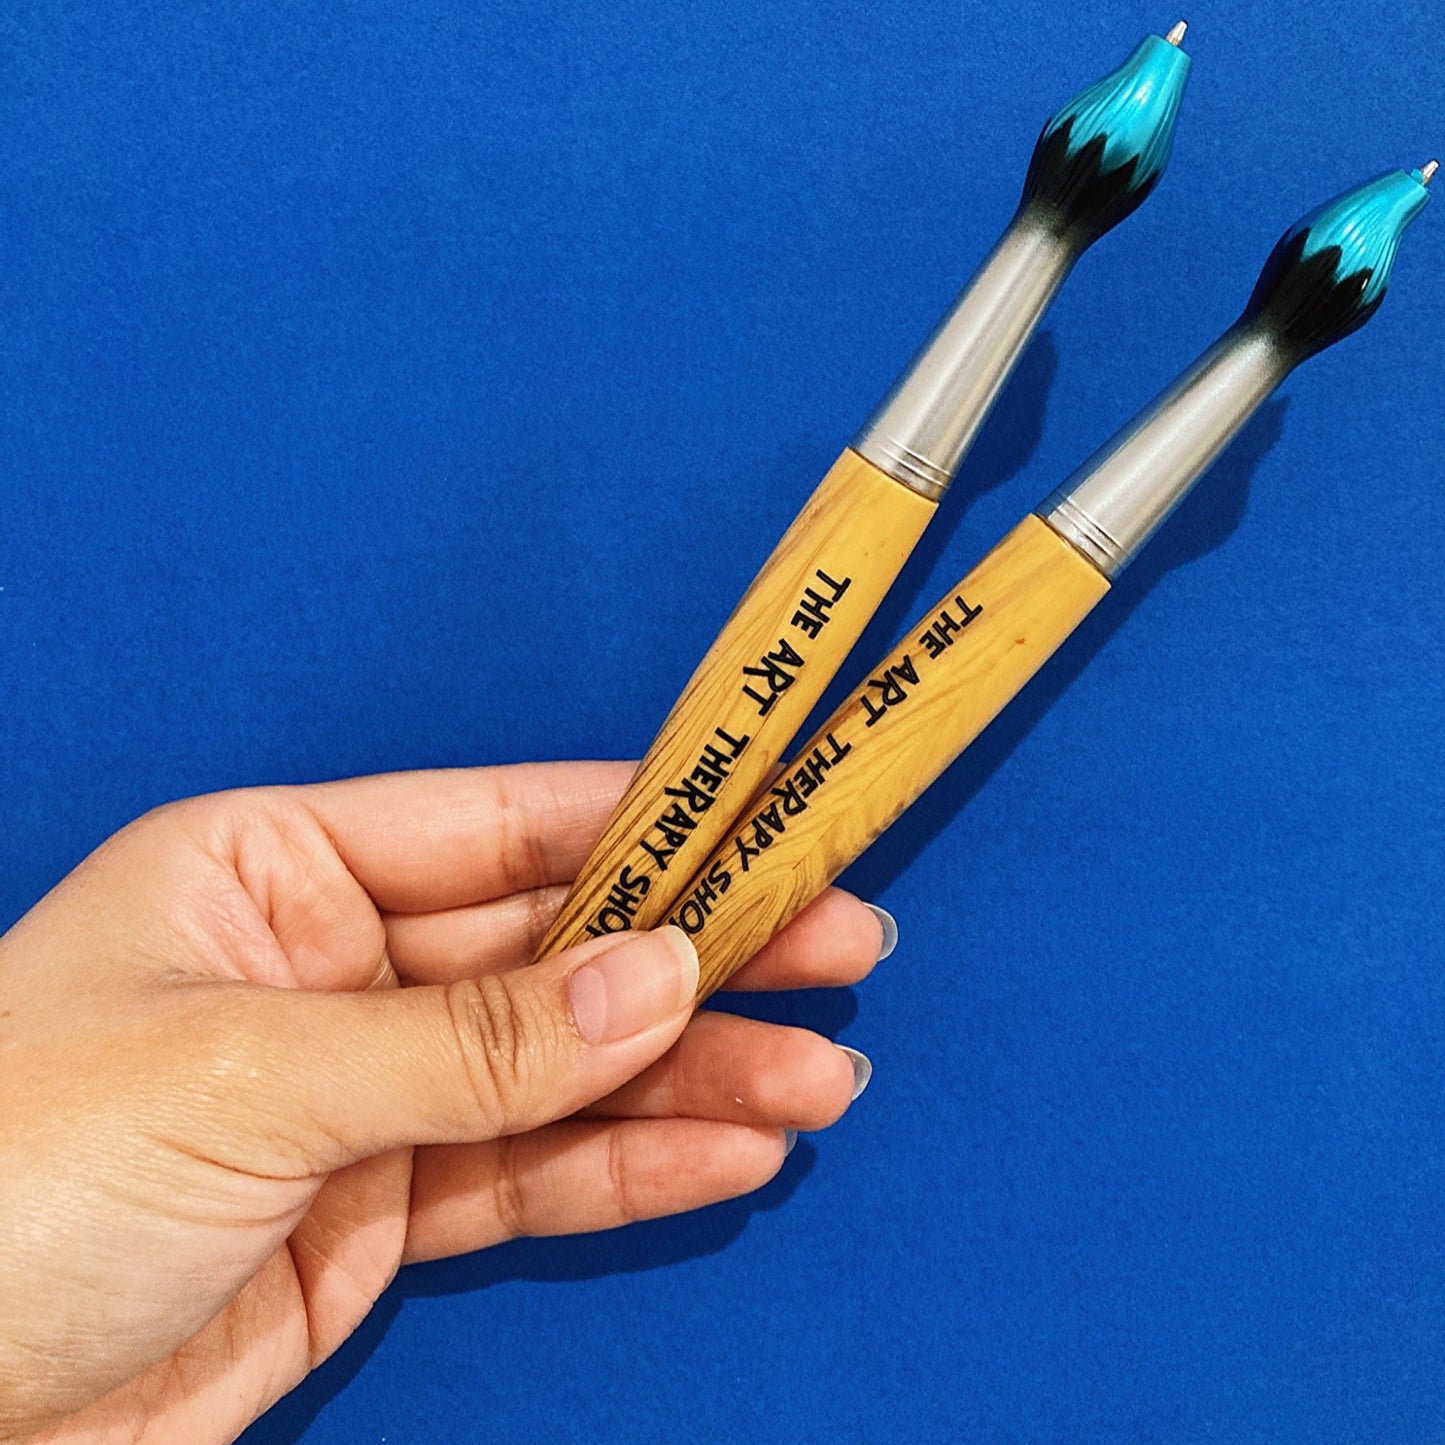 The Art Therapy Shop Paint Brush Pen